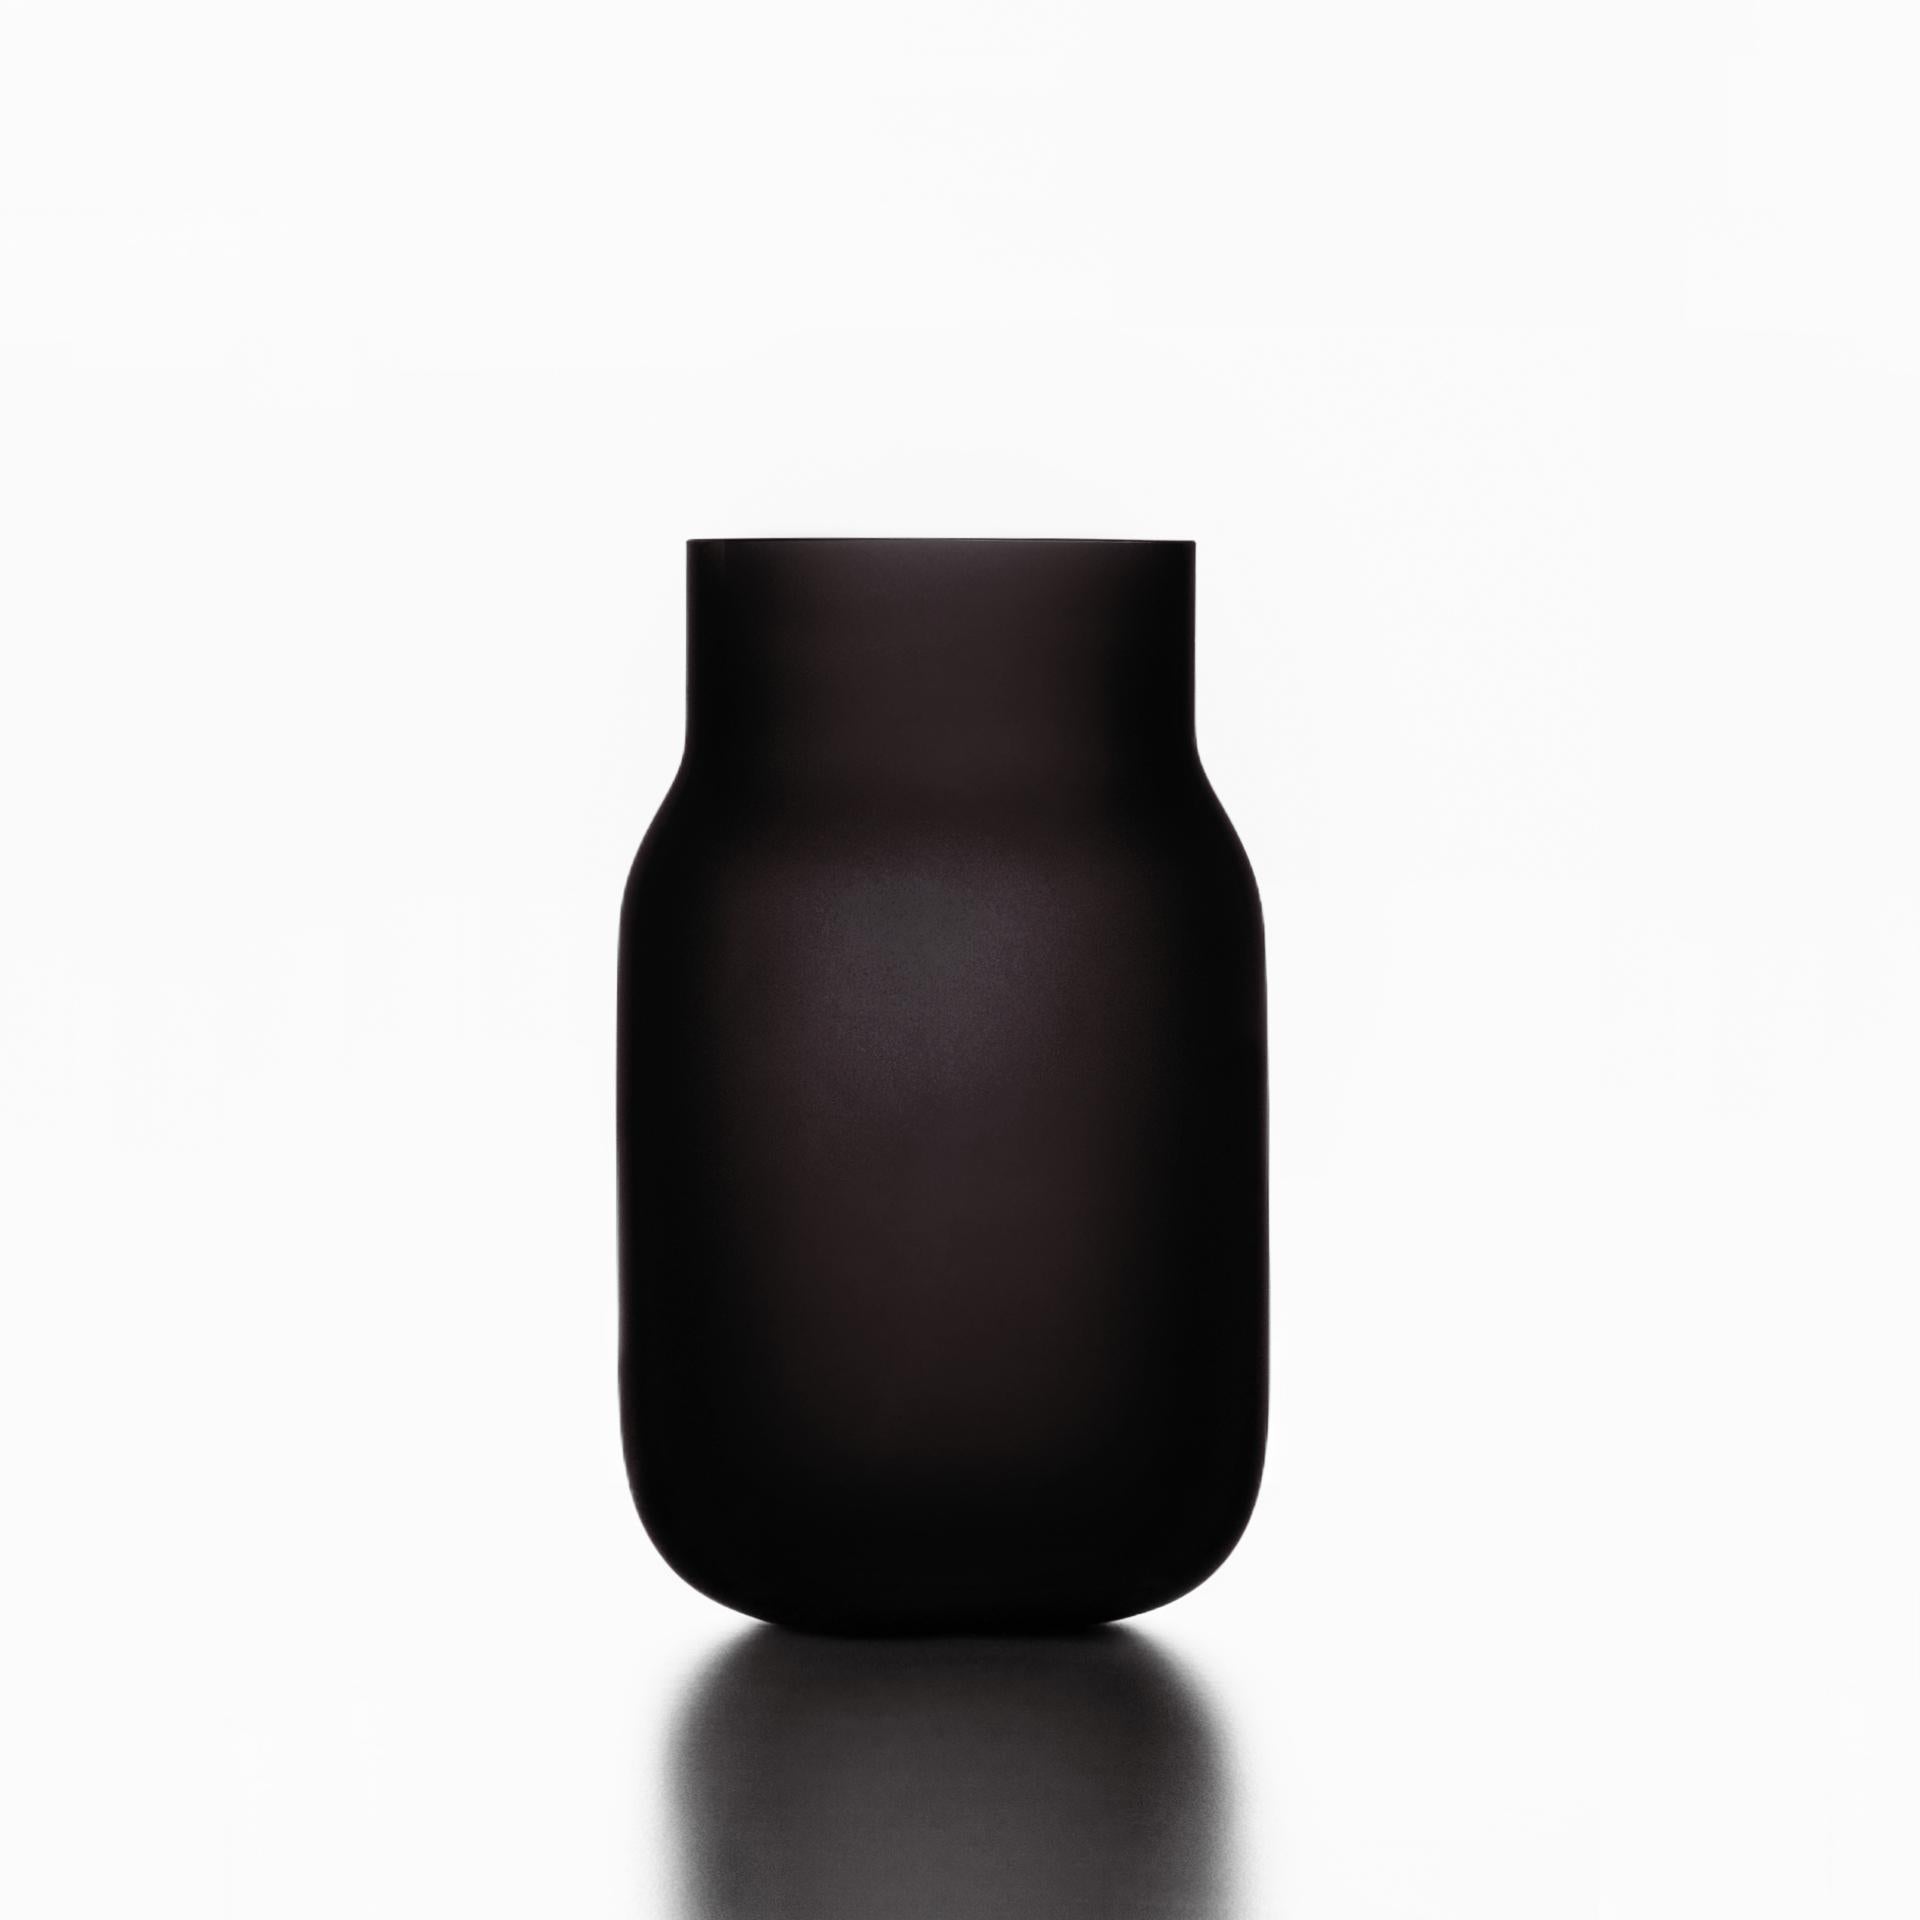 Medium black Bandaska matte vase by Dechem Studio.
Dimensions: D 15 x H 25 cm.
Materials: glass.
Available in 4 sizes: D 15 x H 25/ D 18 x H 24/ D 9 x W 31/ D 22 x H 33 cm.
Available in black, uranium yellow, dark blue.

Hand-blown into beech